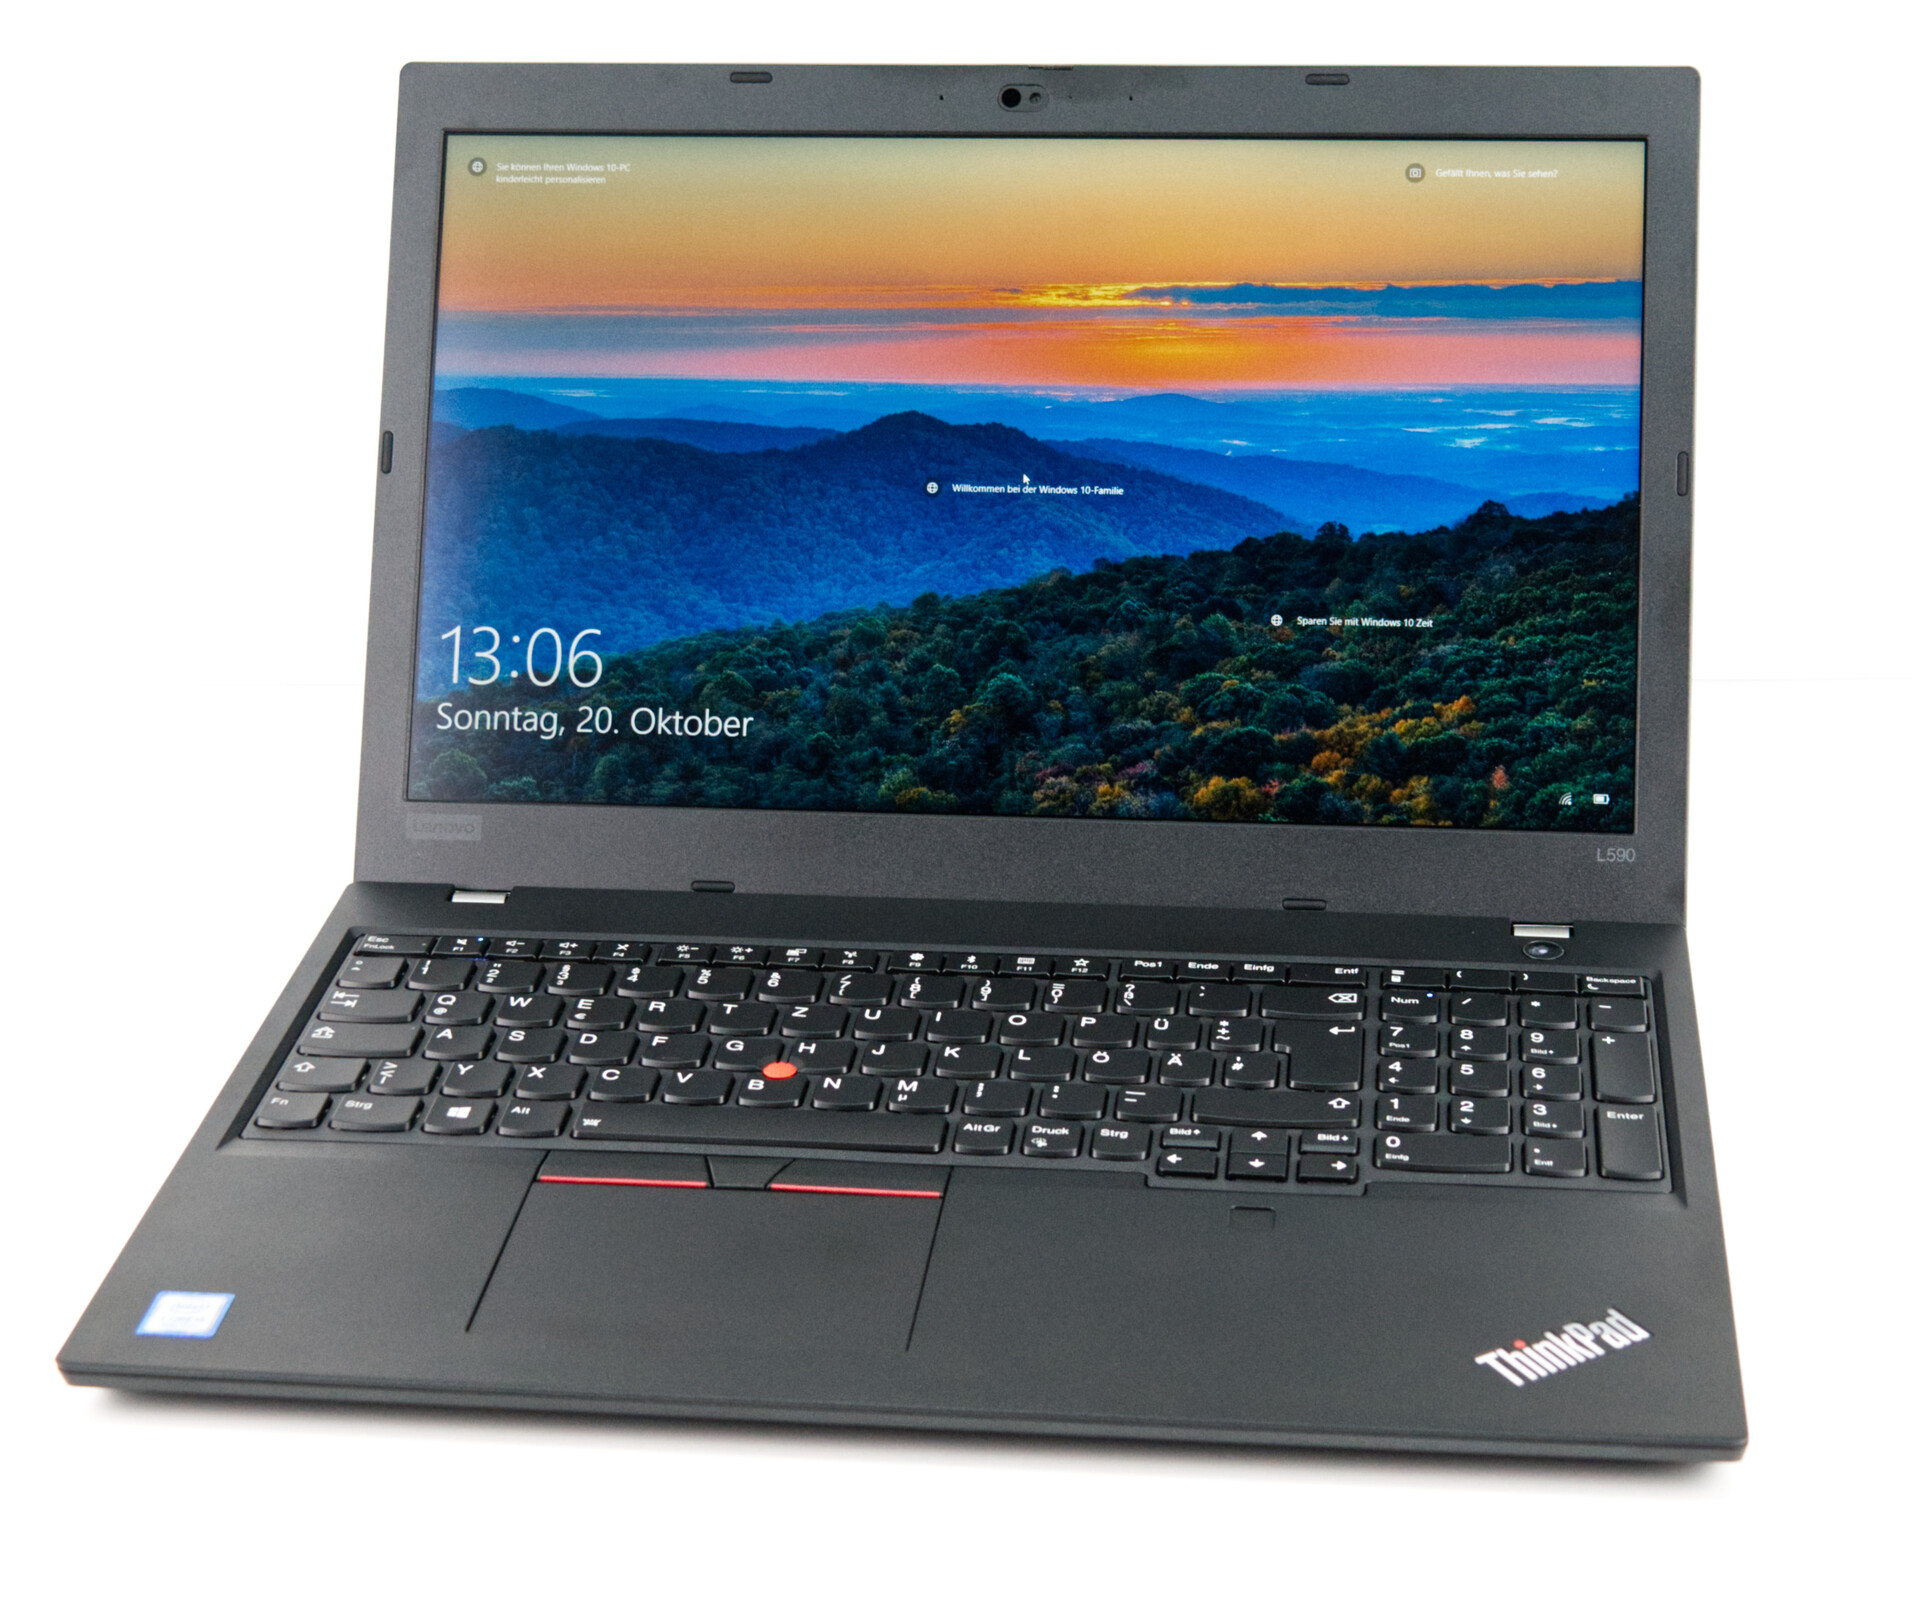 Lenovo ThinkPad L590 A budget business laptop that falls short of